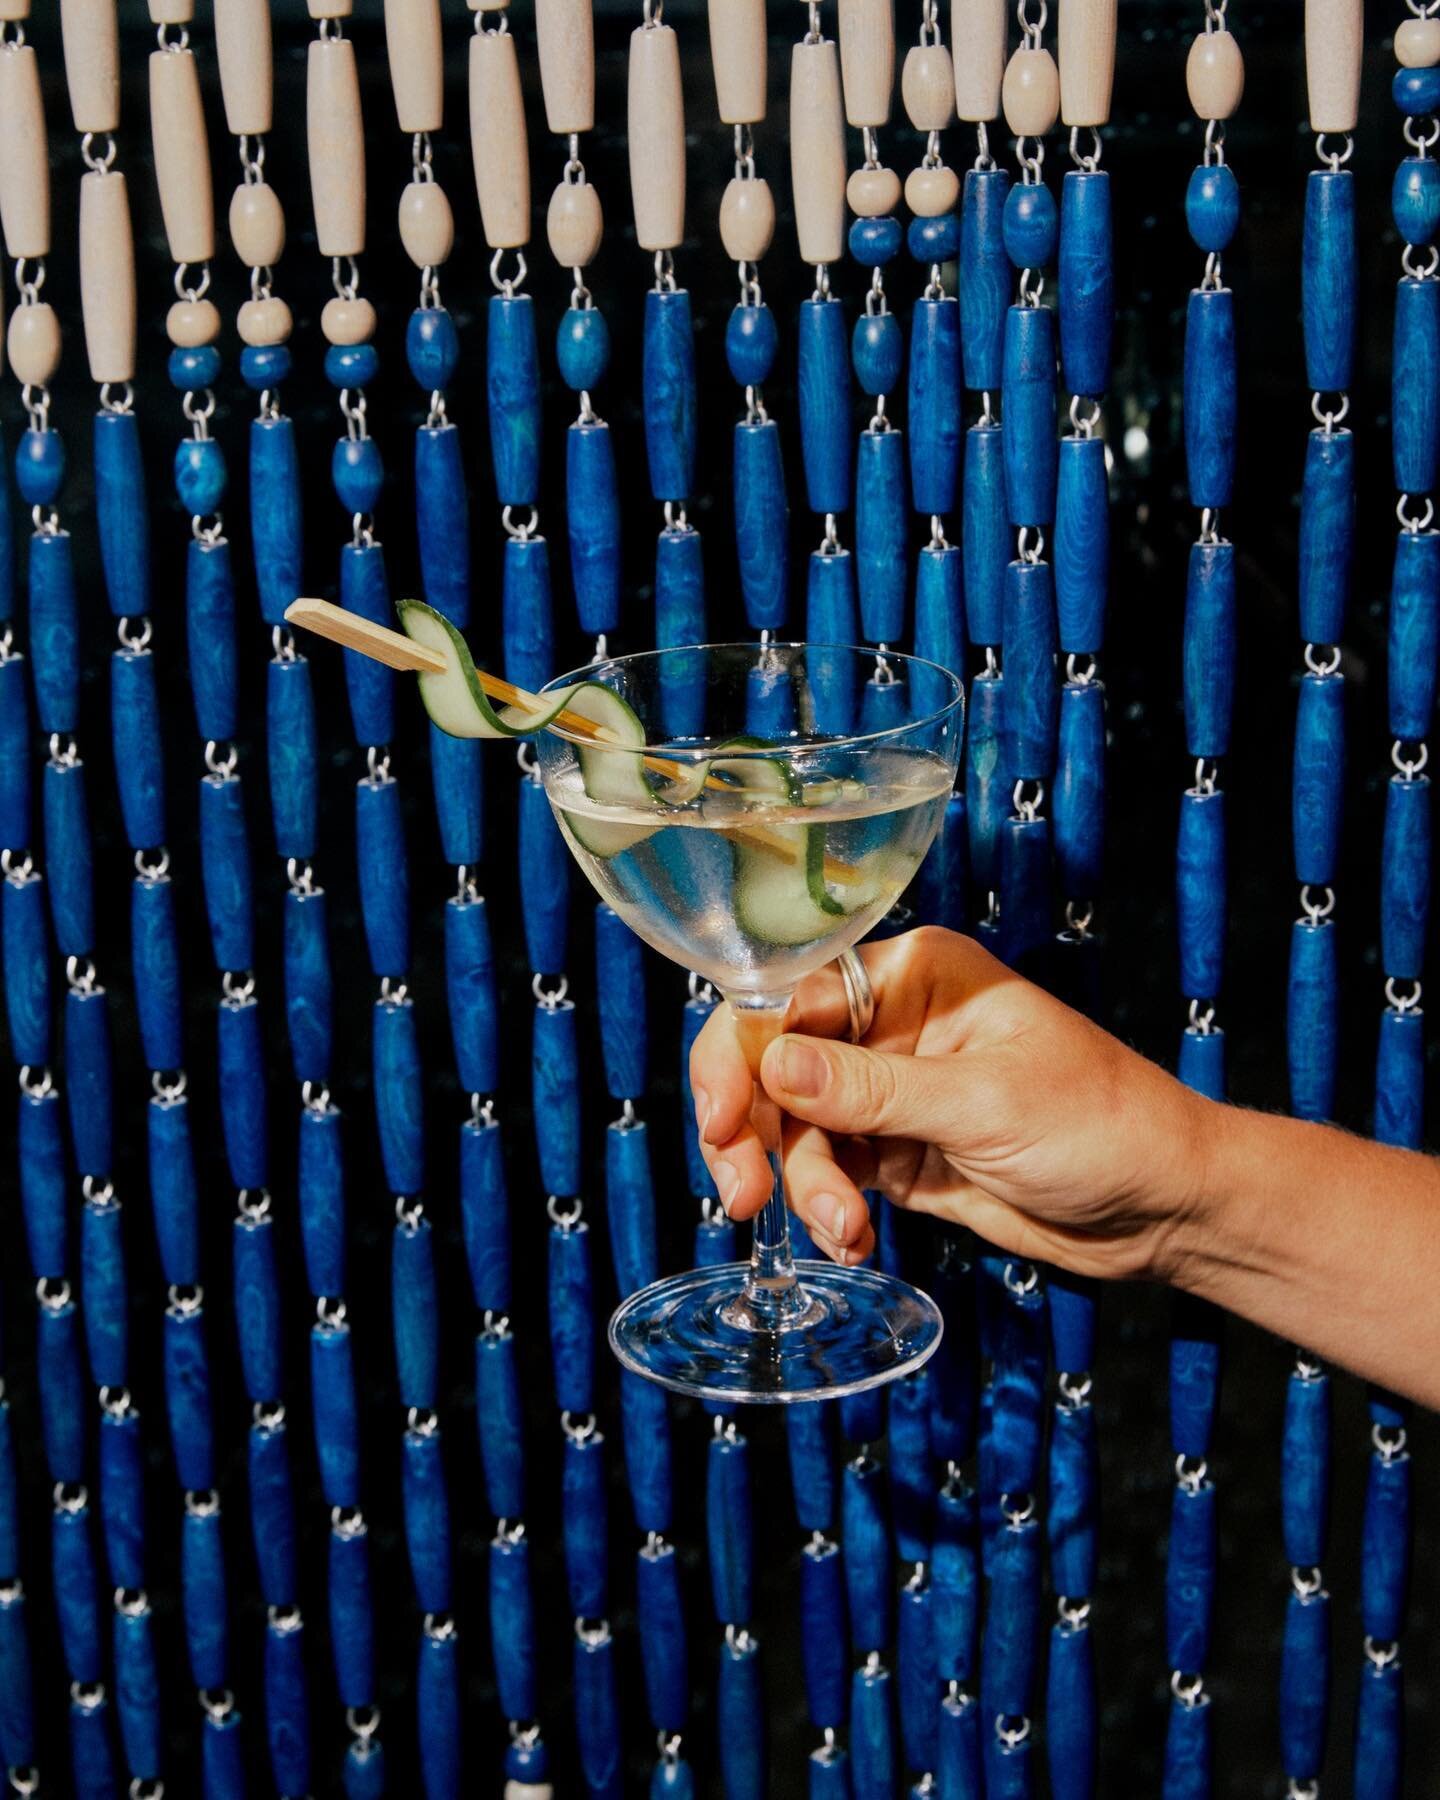 The Tokyo Martini with vodka, dry sake, Dolin Blanc vermouth, lemon bitters, and cucumber.⁠
⁠
#ShinShinSushi #JacksonHole